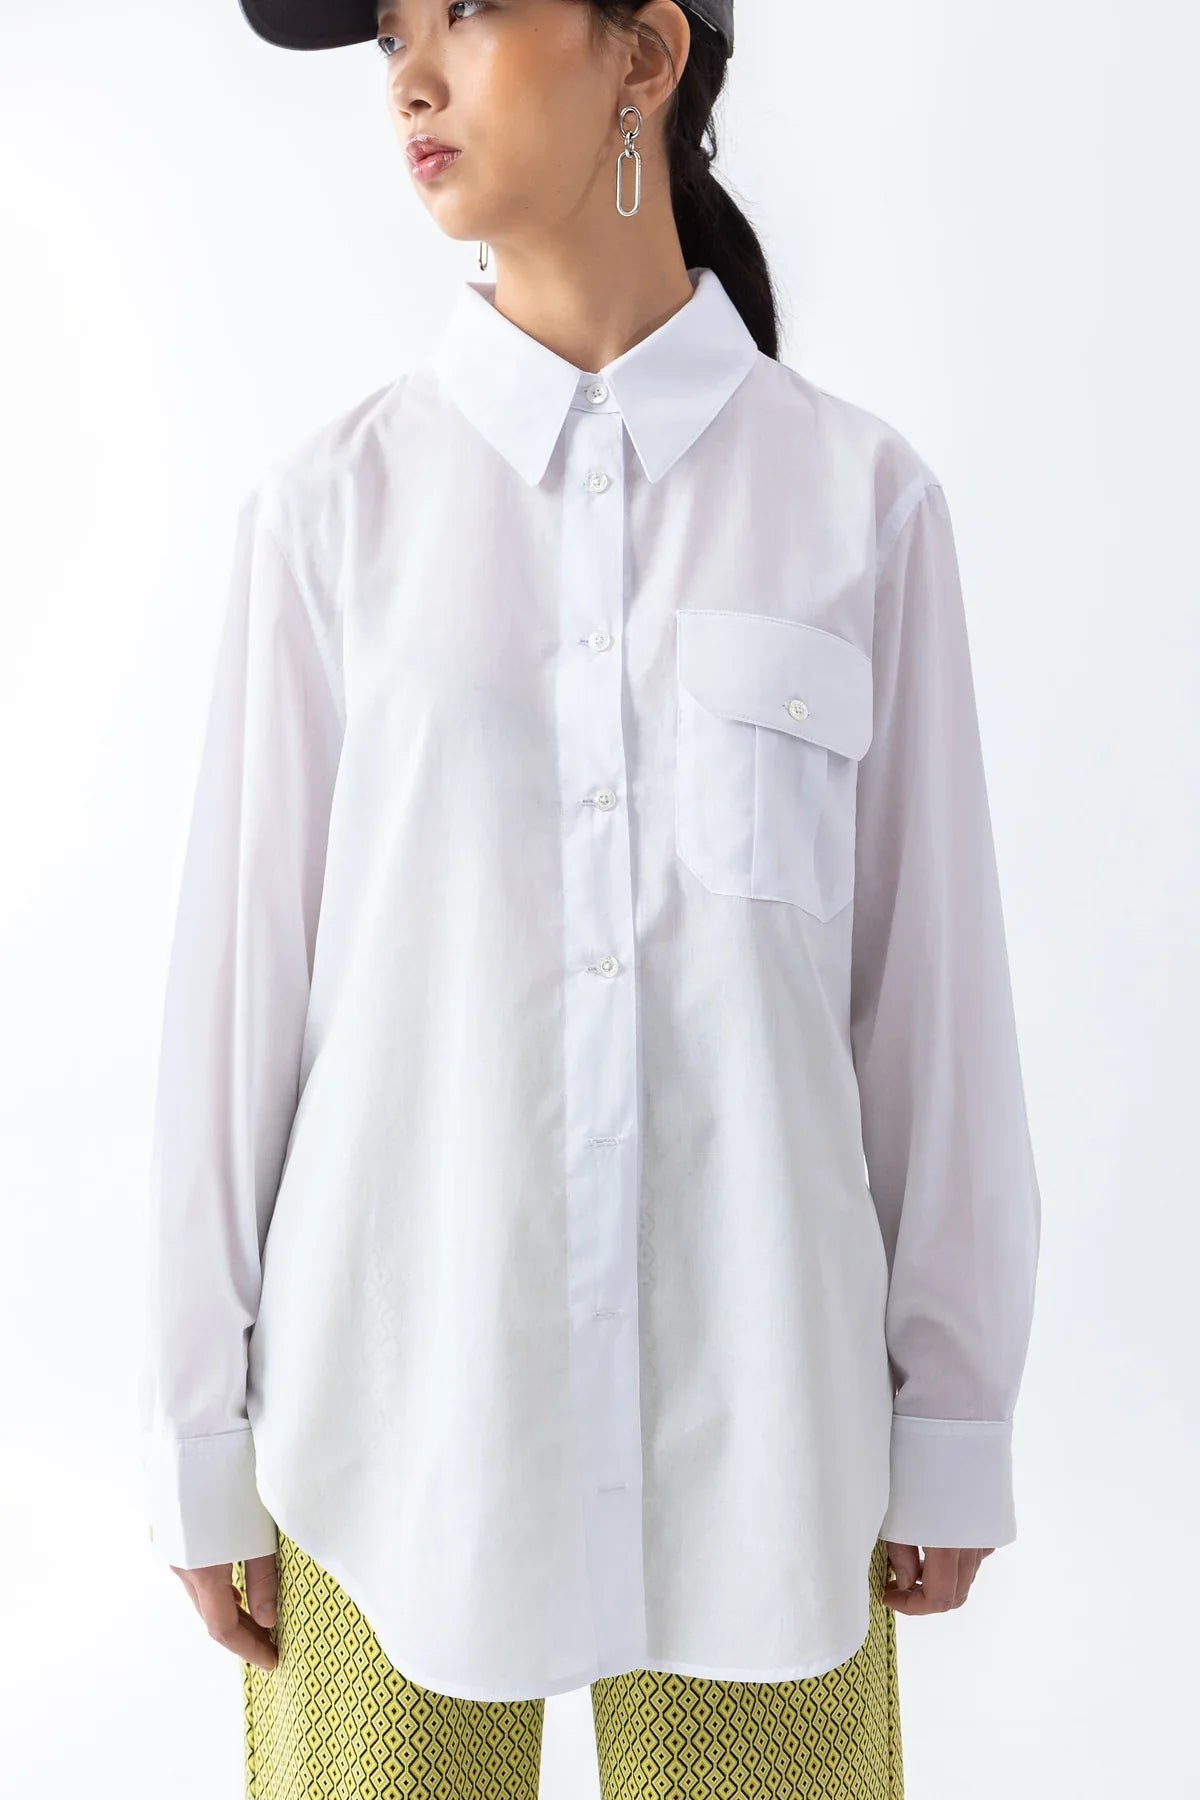 Z3 Boyfriend Material White Shirt